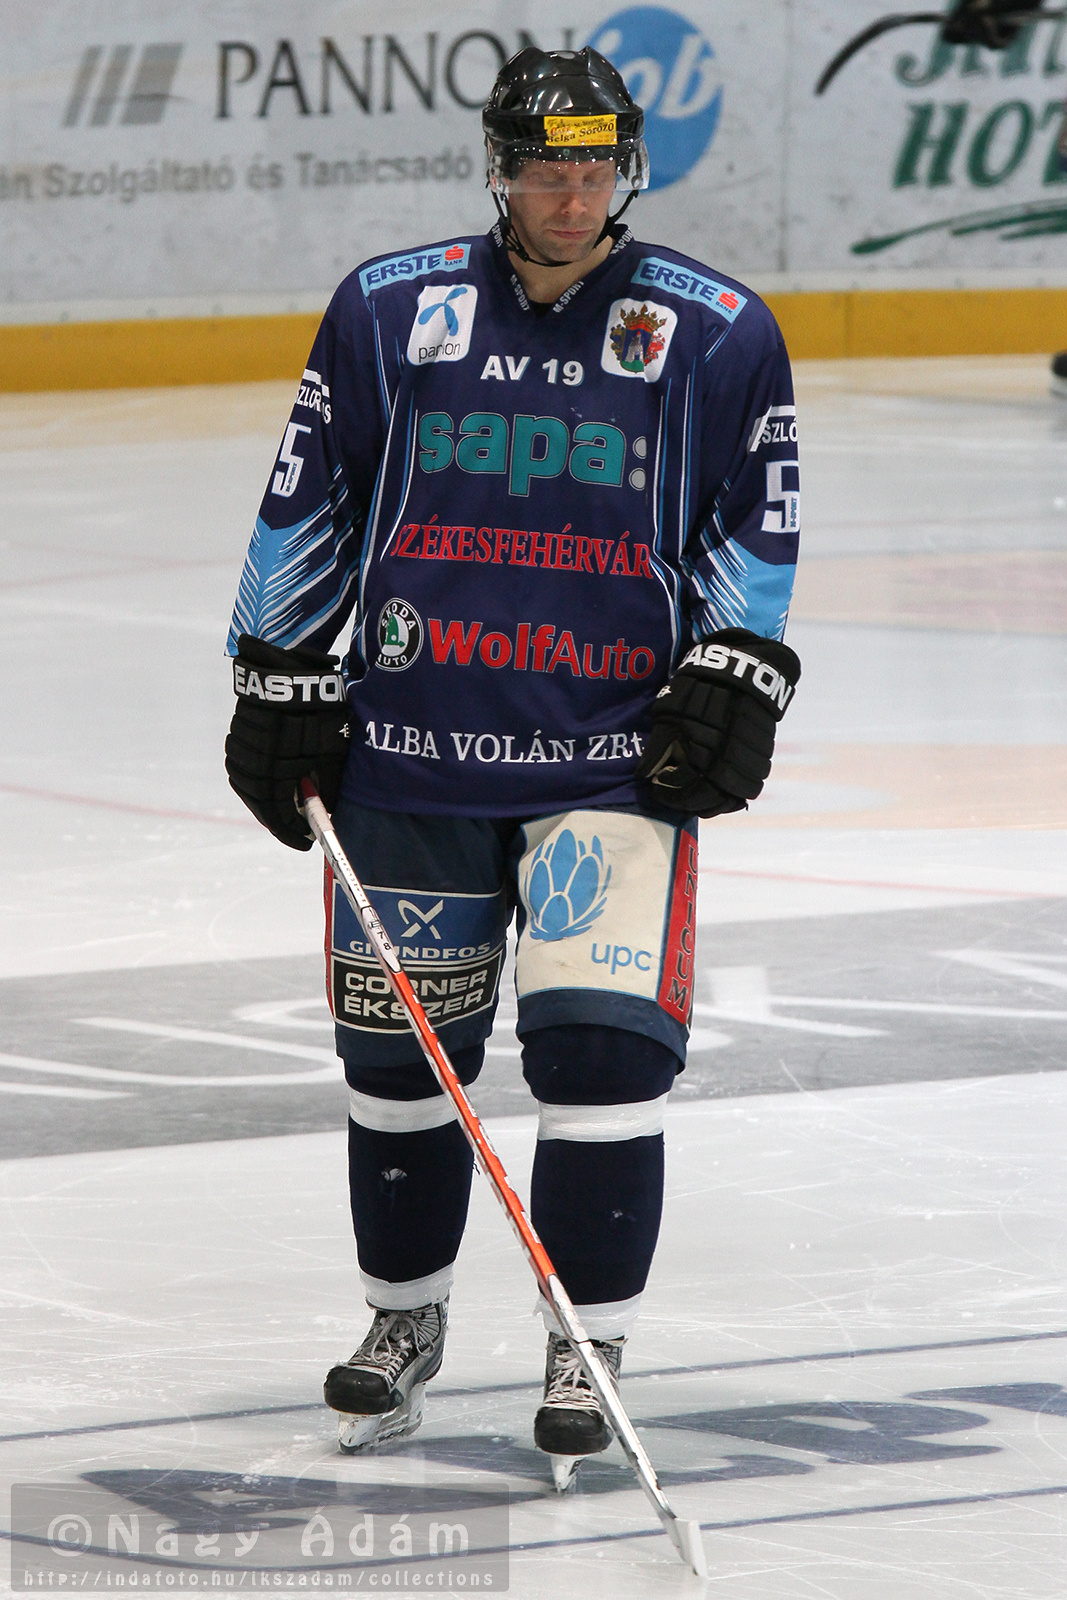 12 - Oscar Ackeström